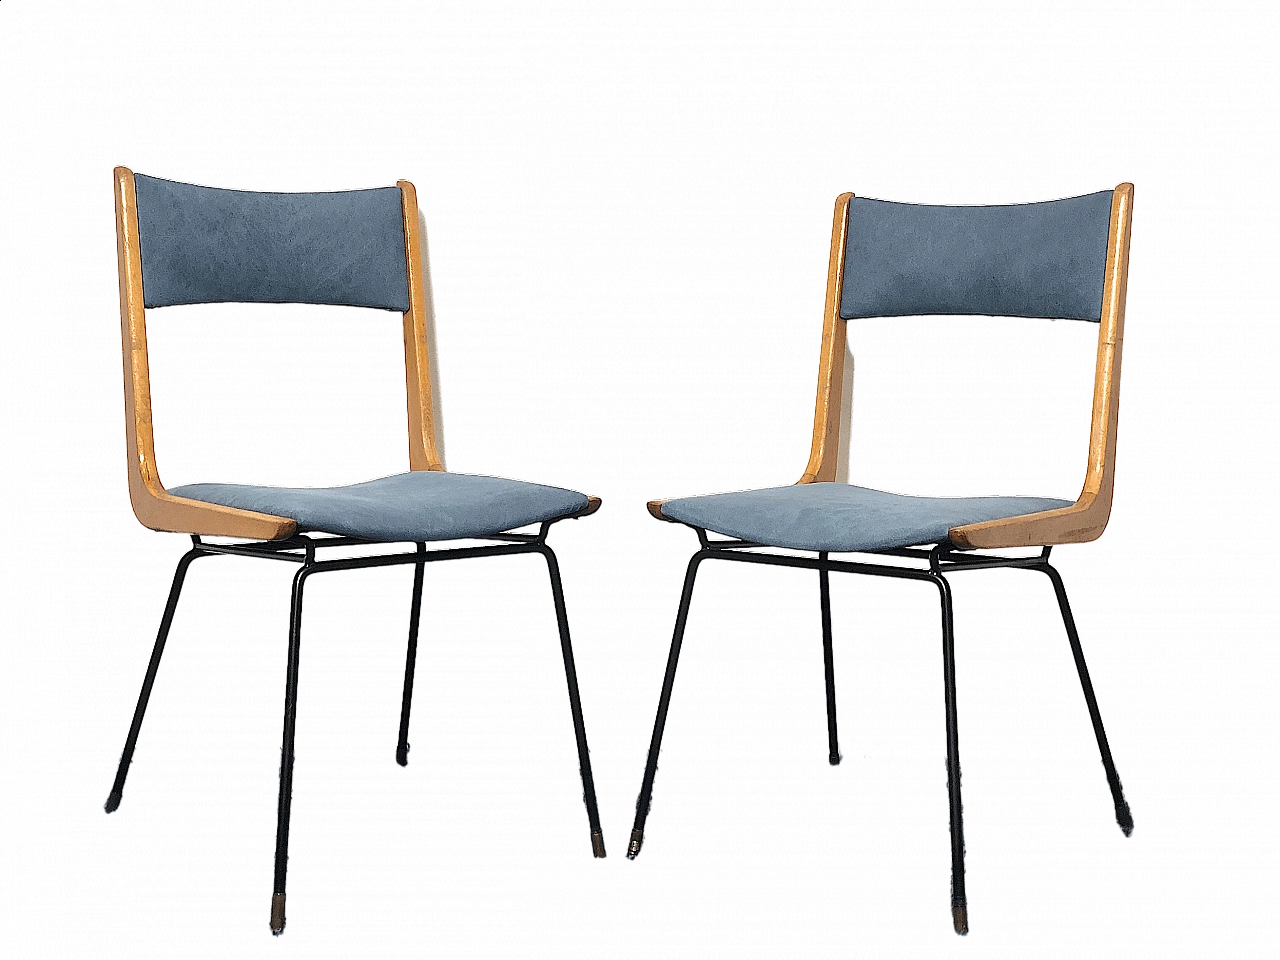 Pair of Boomerang chairs by Carlo De Carli, 1950s 1481117